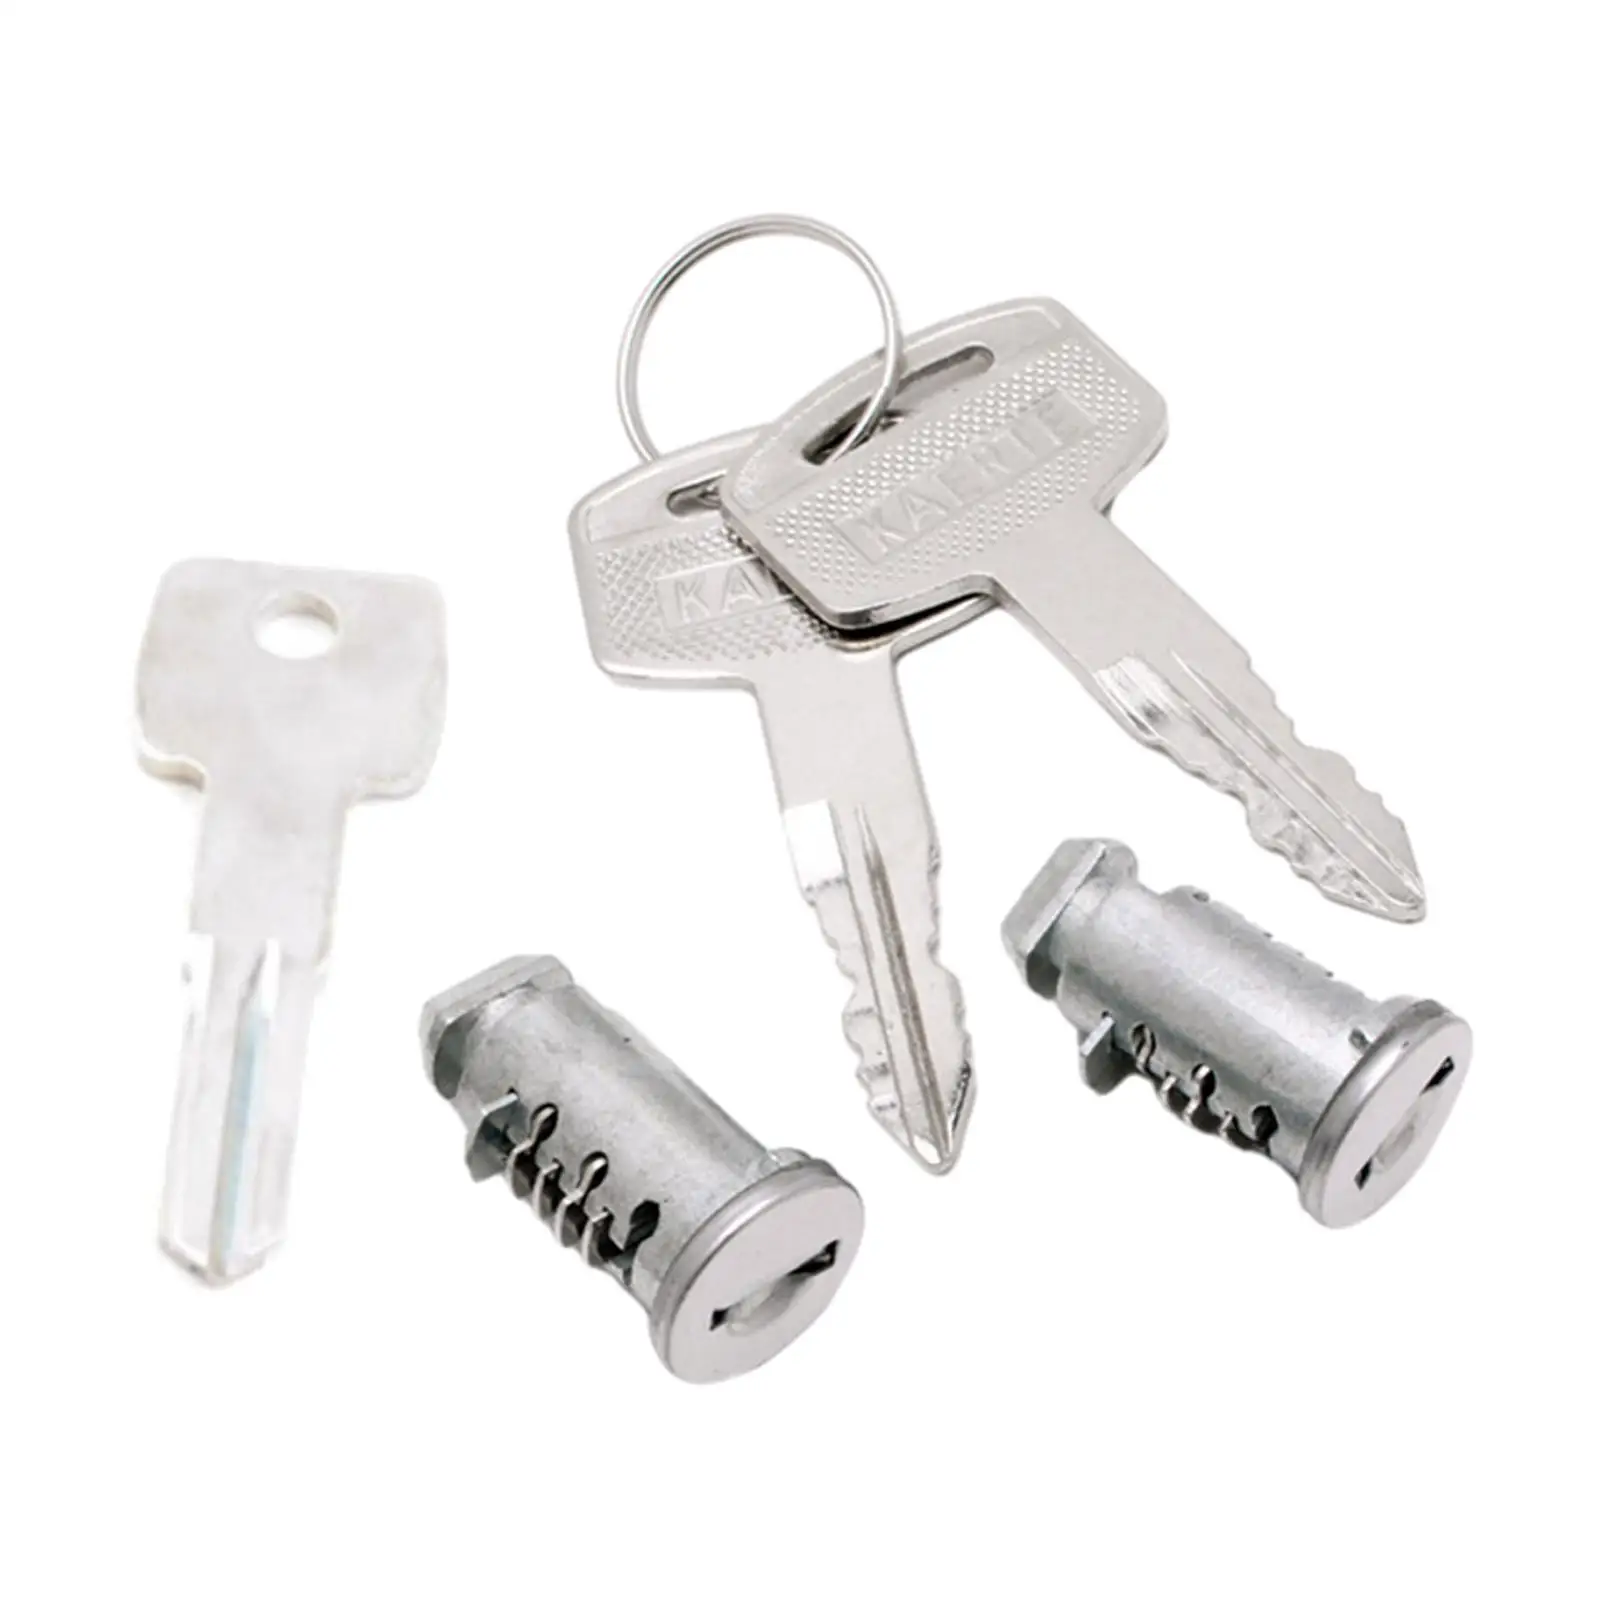 2x Lock Cylinders for Car Racks System Lock ,Core Roof Rack Locks, Cross Bars Locks and Key Kit Crossbar Locks for SUV